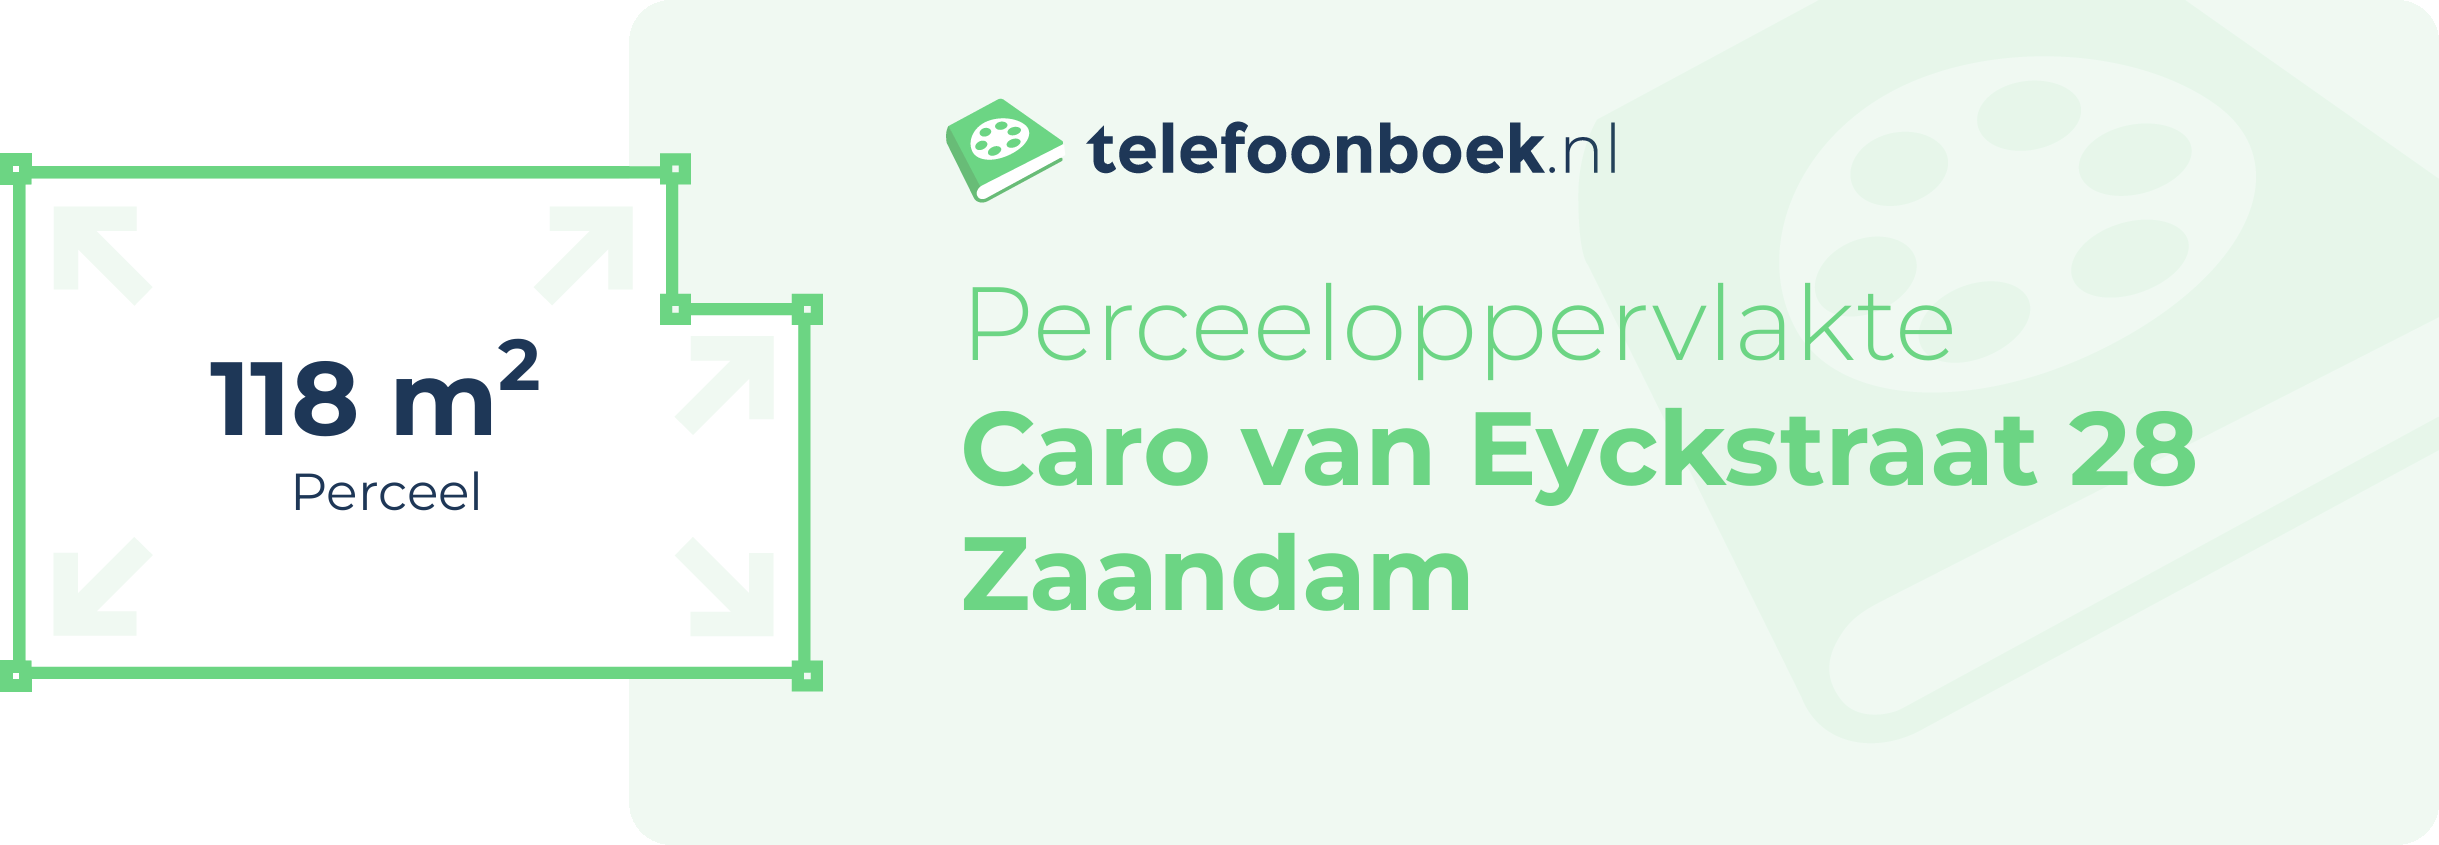 Perceeloppervlakte Caro Van Eyckstraat 28 Zaandam